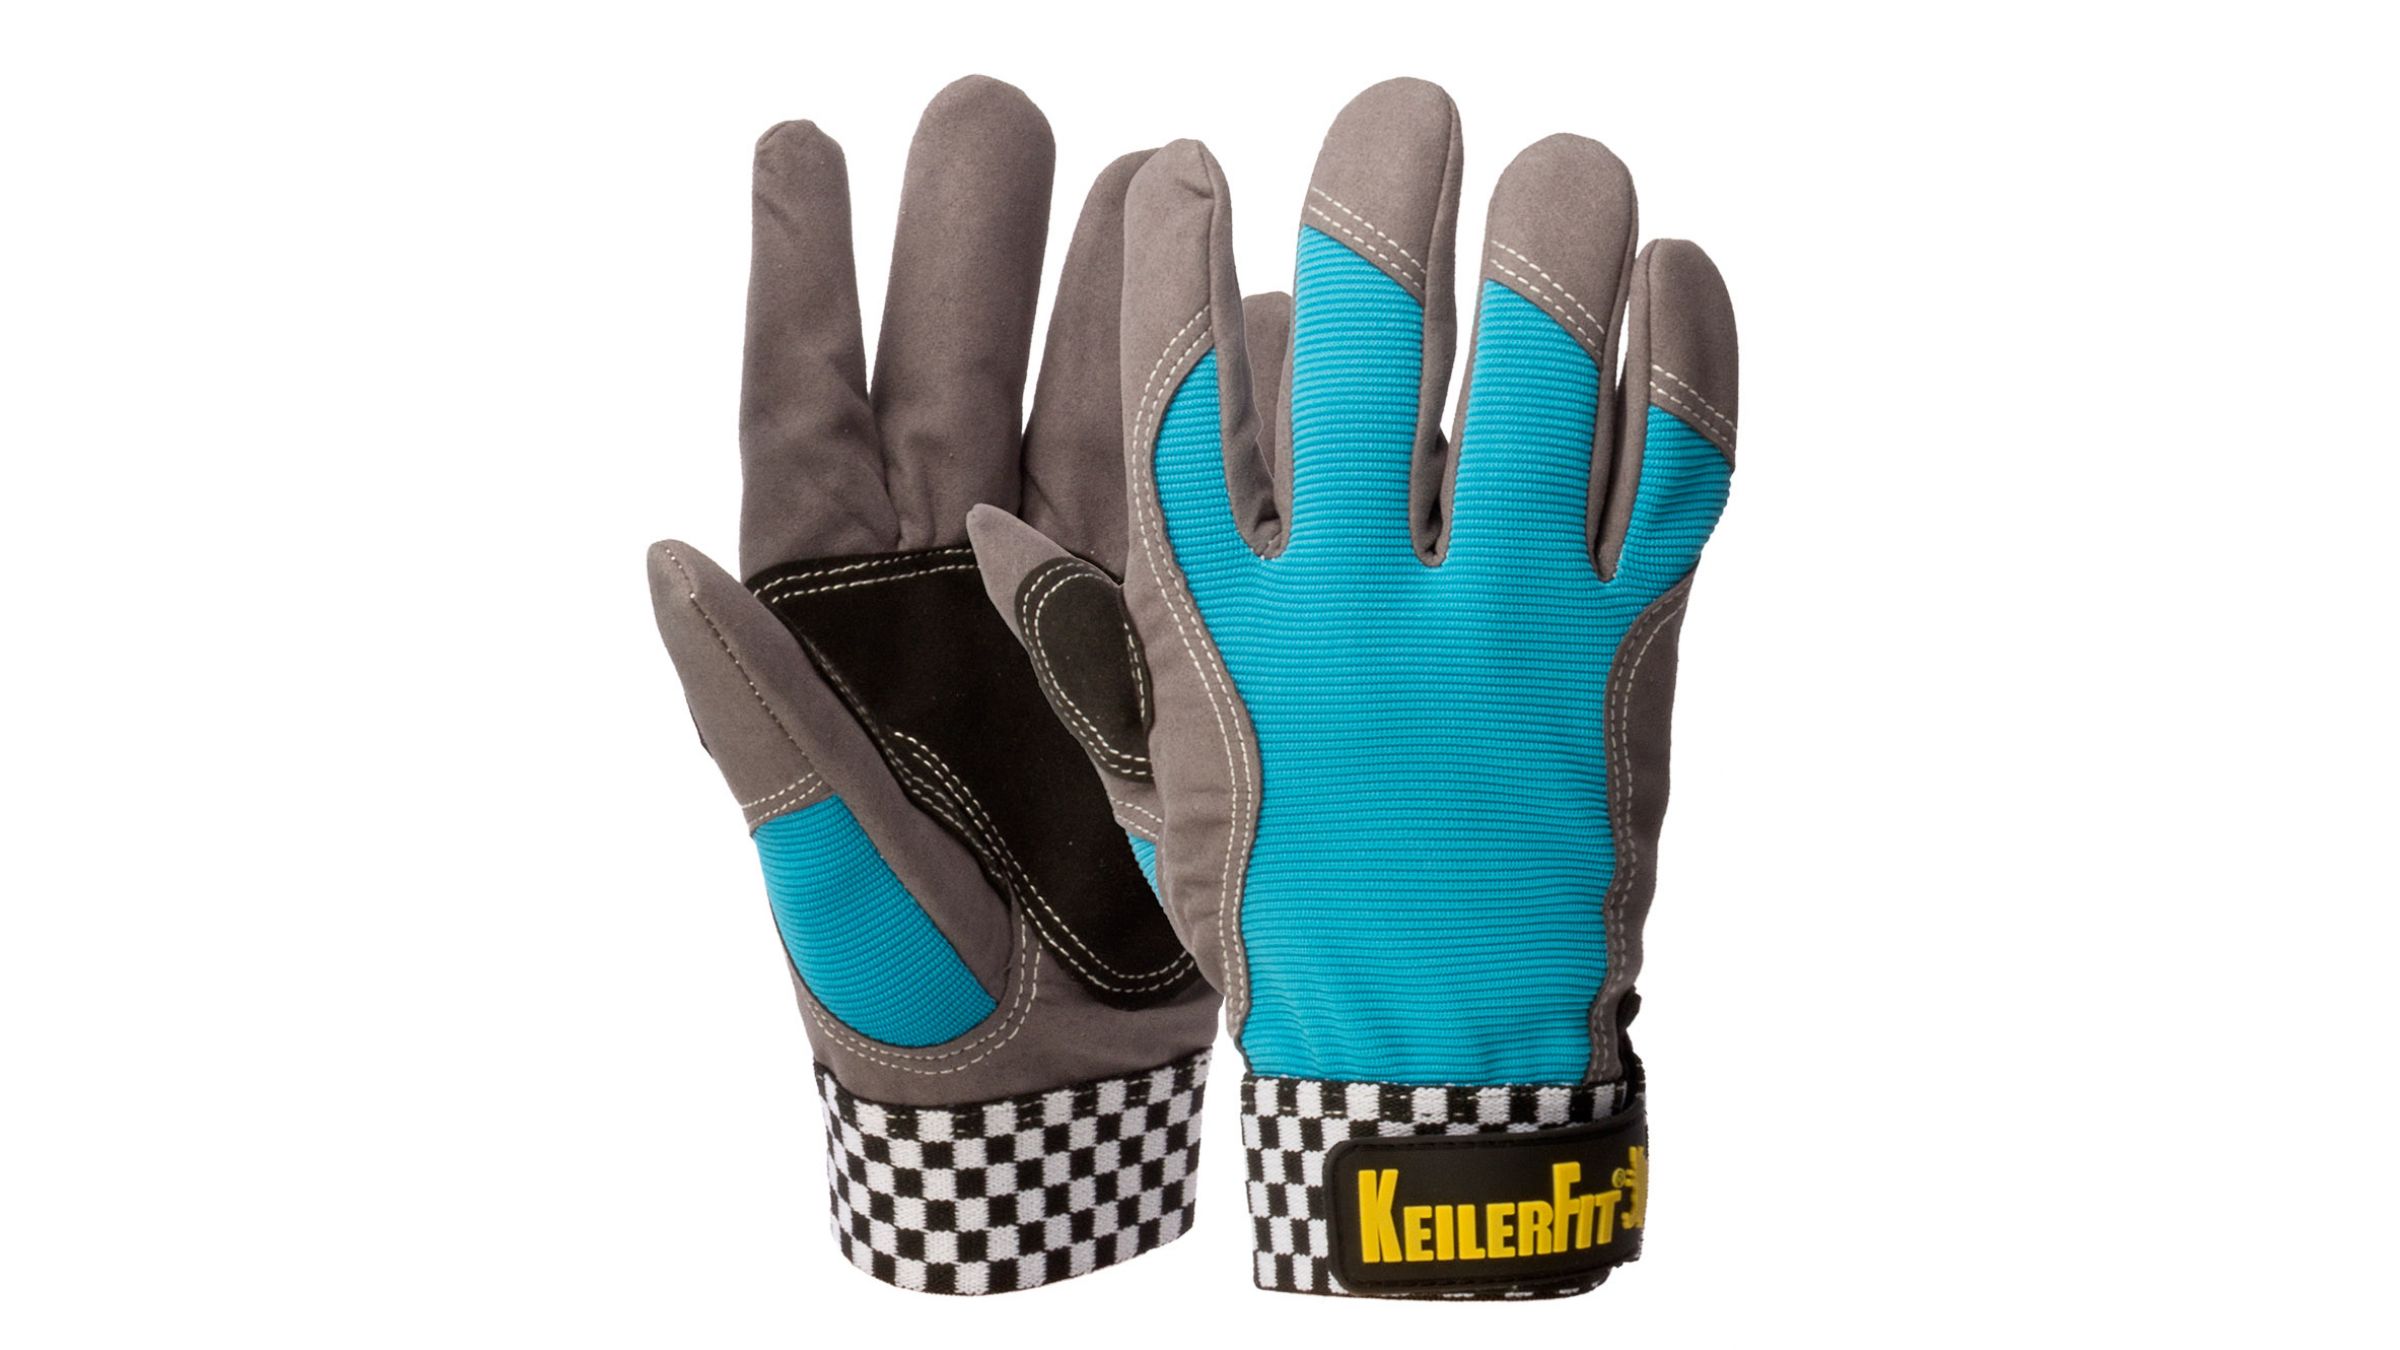 KeilerFit blue Gr.7 Lederfreier Forsthandschuh Handschuh 2 x KeilerFit blue 